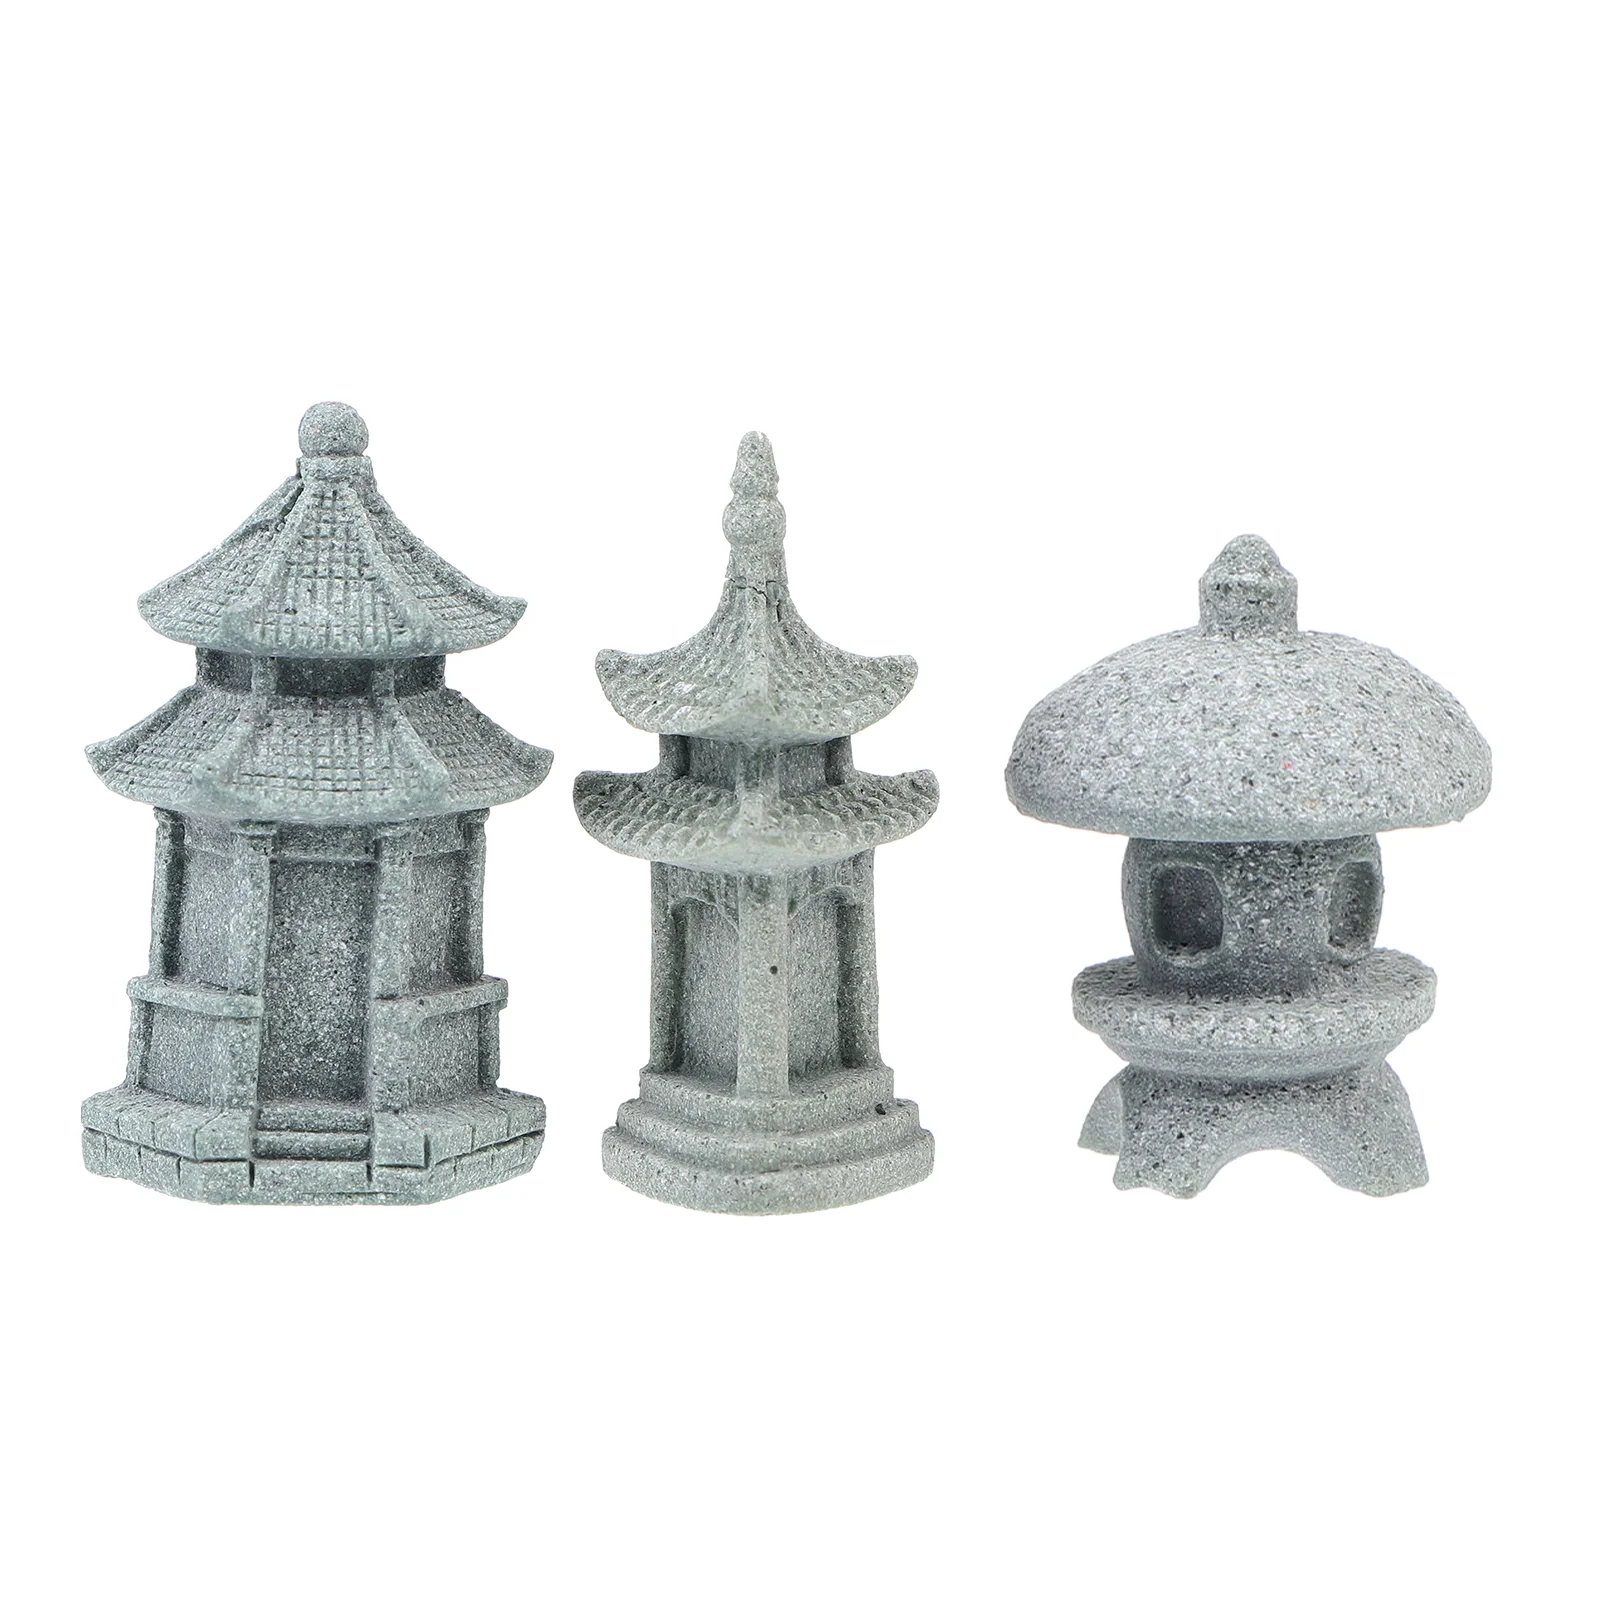 

3 Pcs Simulation Landscape Furnishing Articles Outdoor Pots Garden Decorations Ornaments Fairy Gardens Rockery Sandstone Pagoda